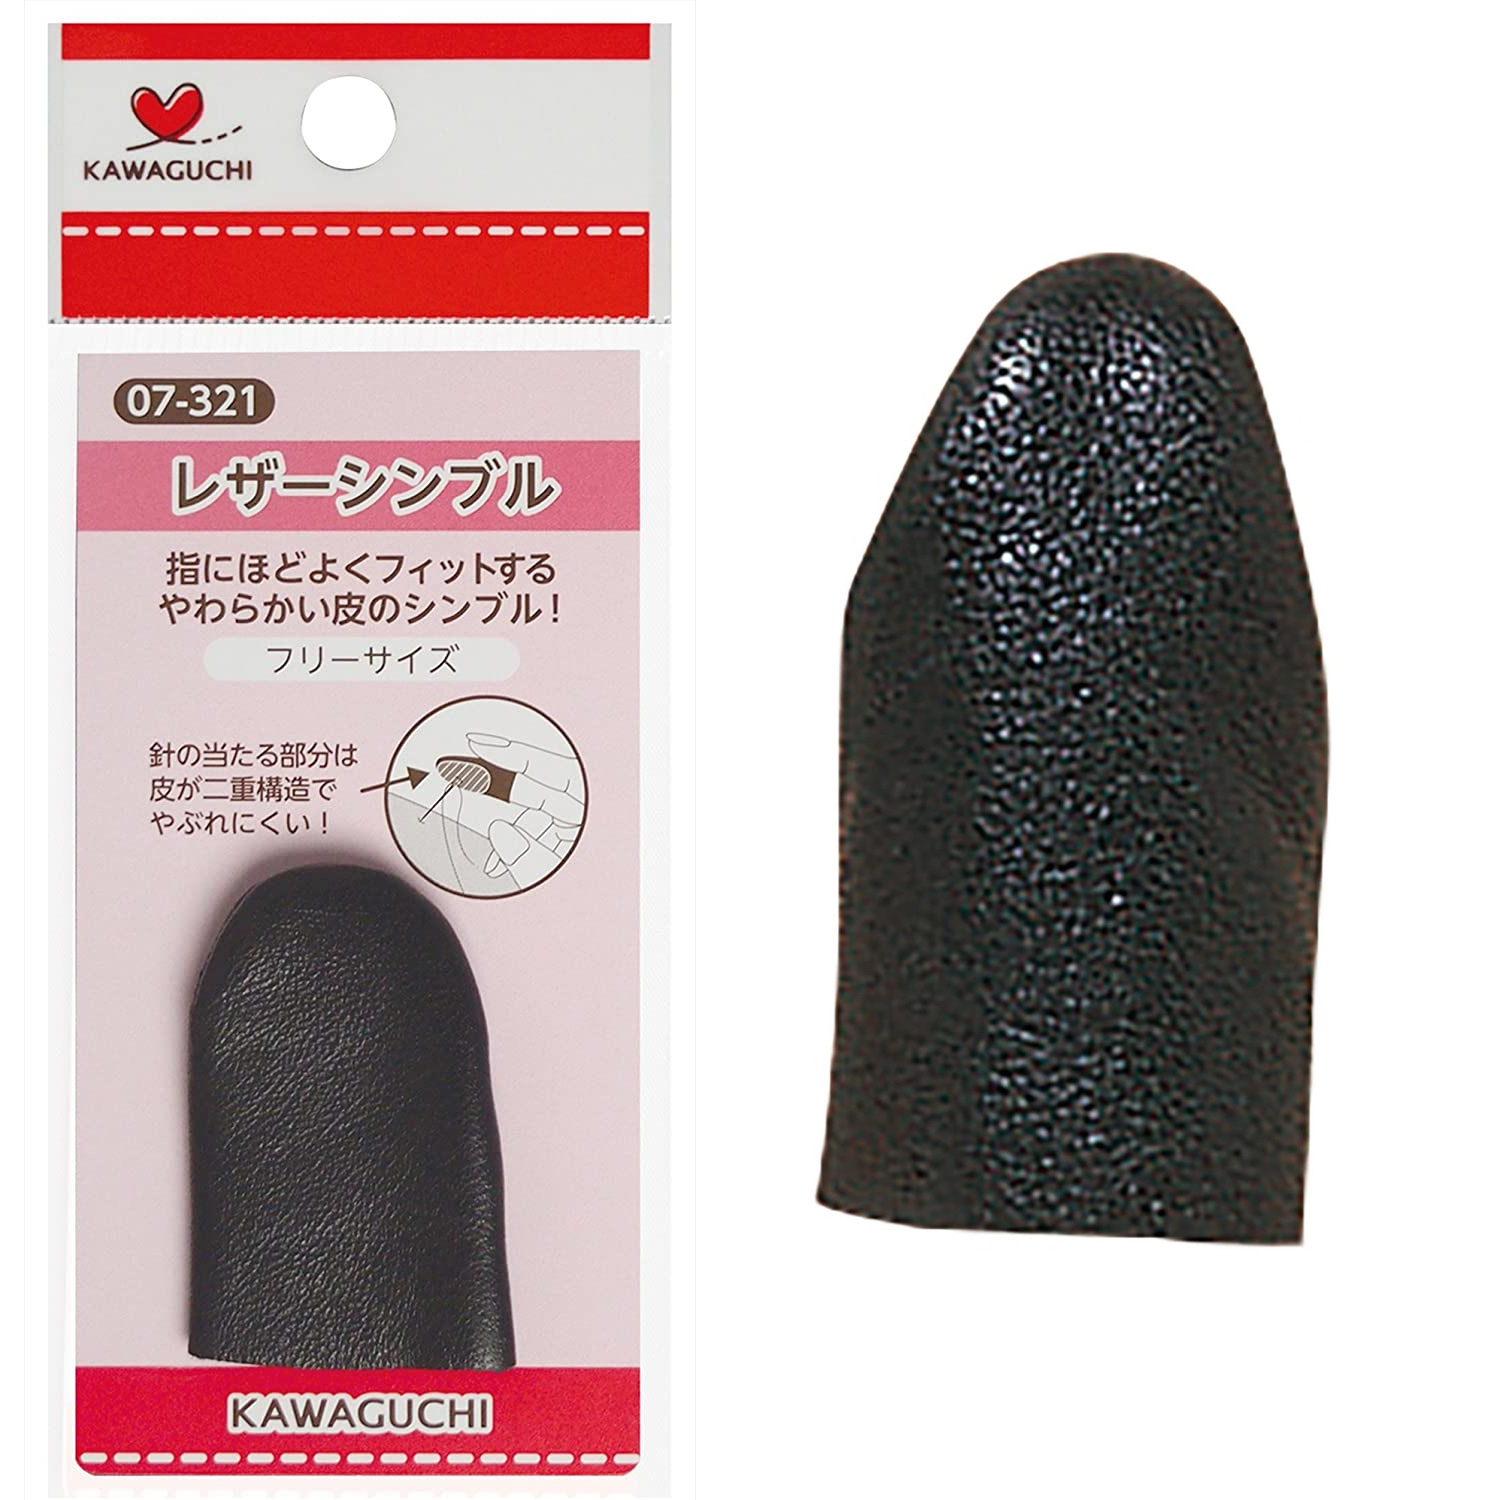 TK07321 KAWAGUCHI Leather Thimble; one size fits all (pcs)